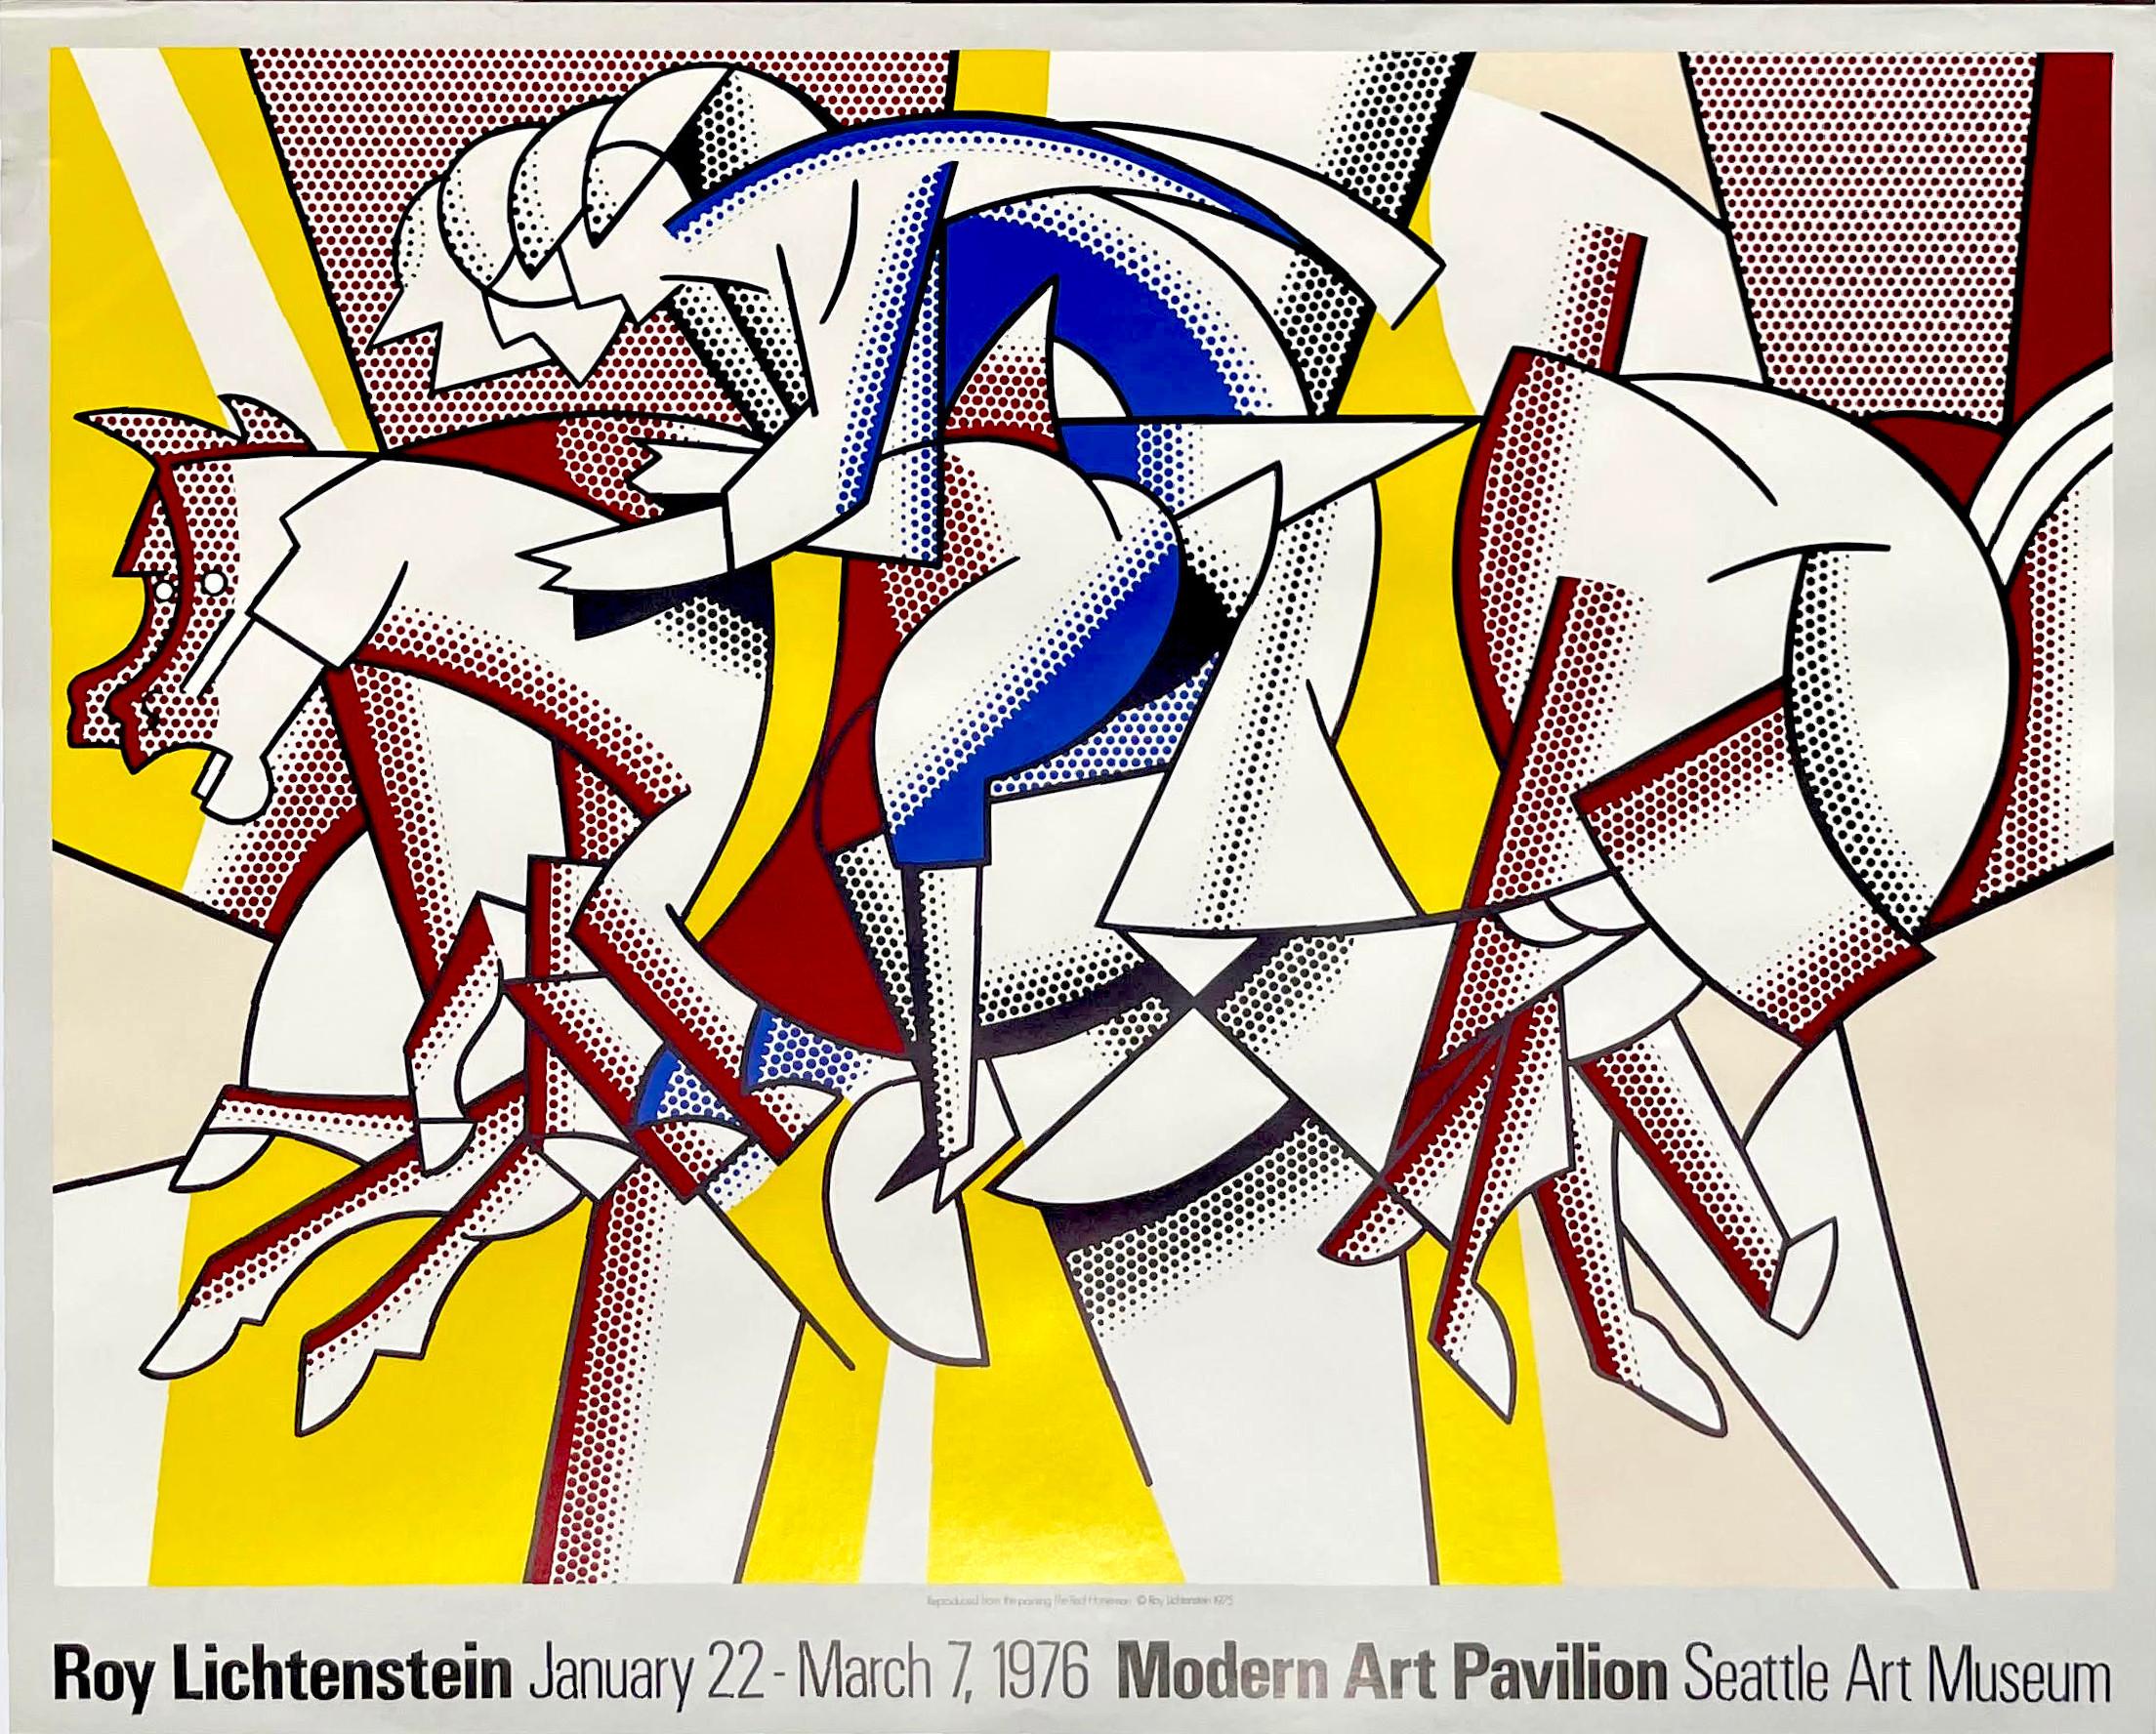 The Red Horsemen (aka Equestrians) Modern Art Pavilion Seattle Art Museum Poster